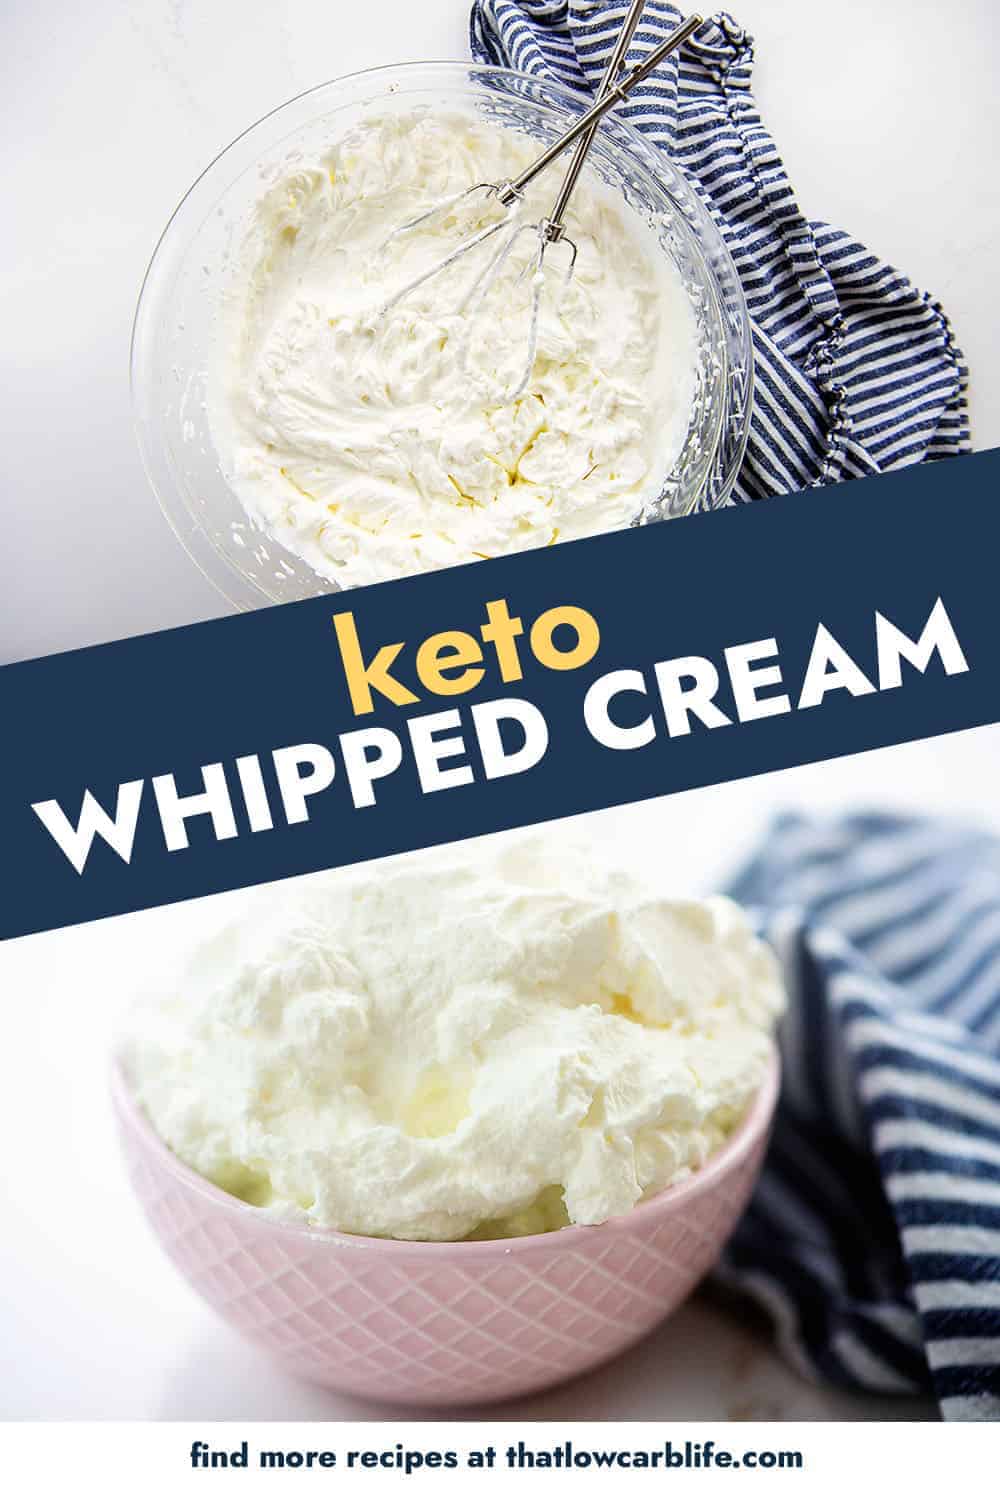 keto whipped cream photo collage.